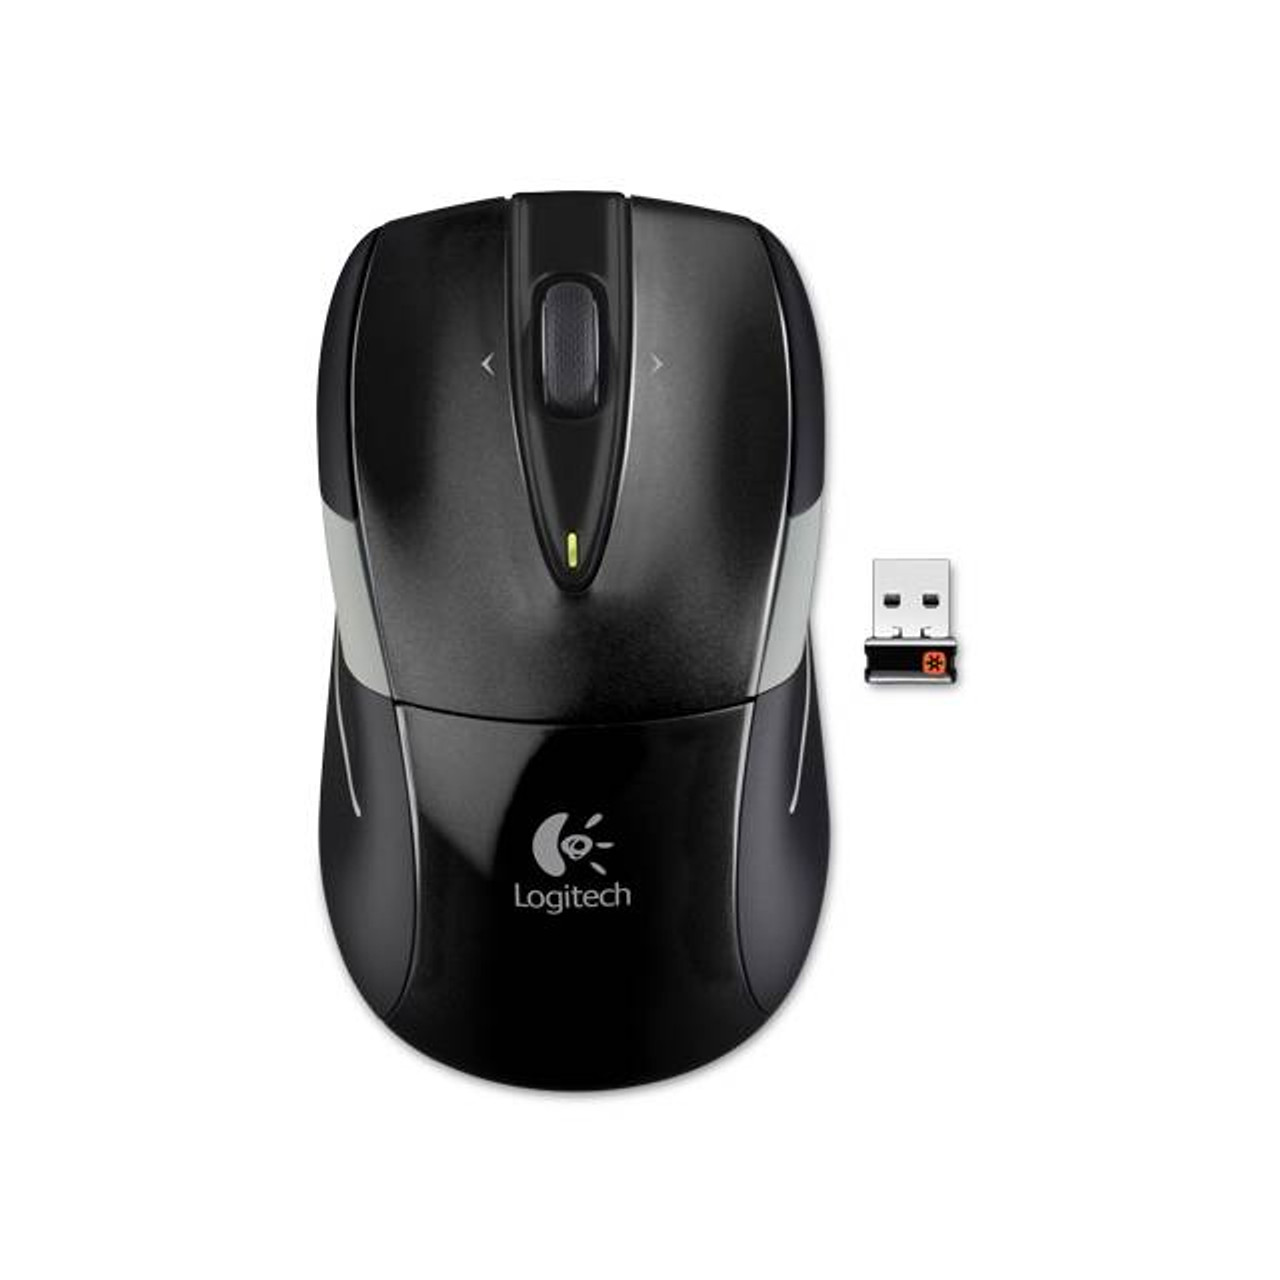 Logitech M525 Wireless Optical Mouse (Black)